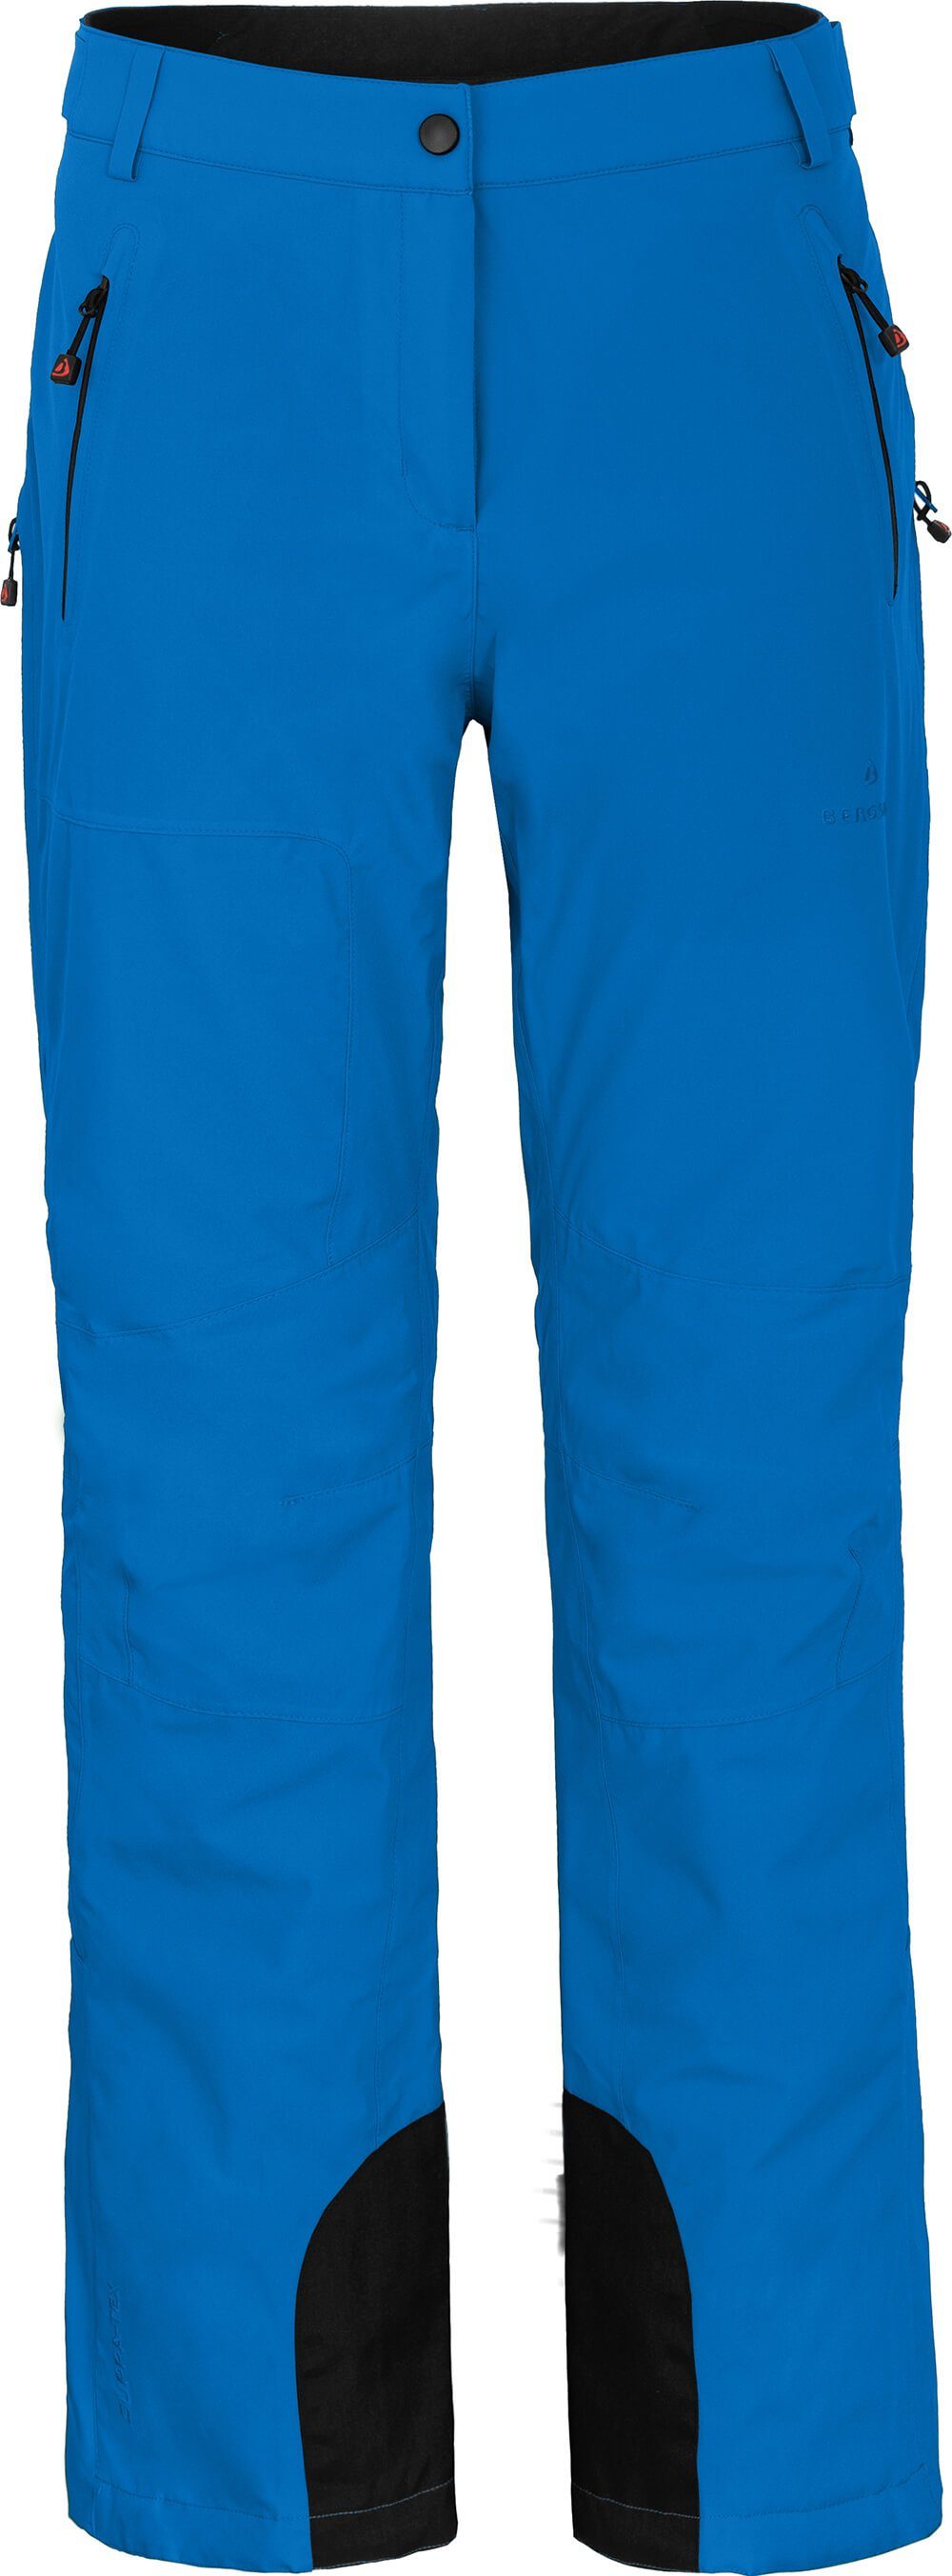 Bergson Skihose ICE Damen Skihose, wattiert, 20000 mm Wassersäule, Kurzgrößen, blau